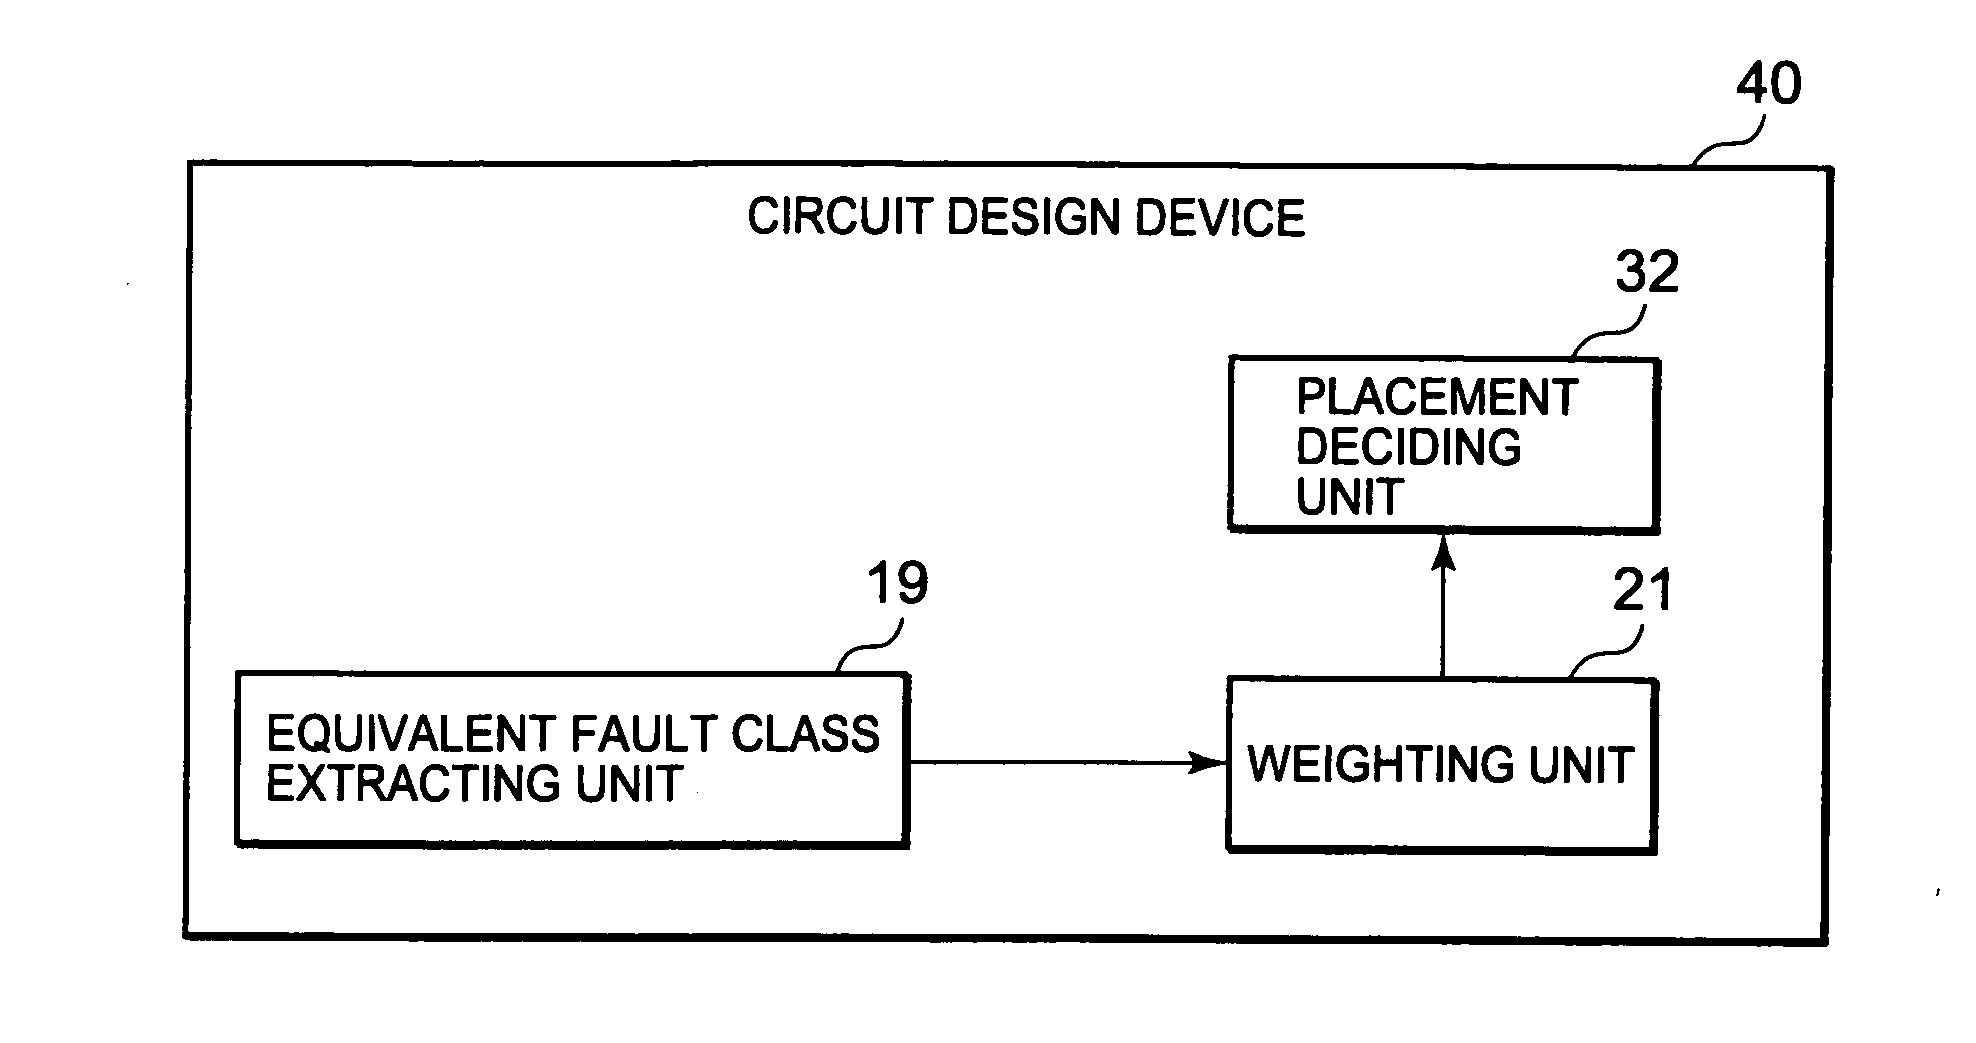 Circuit design device for conducting failure analysis facilitating design